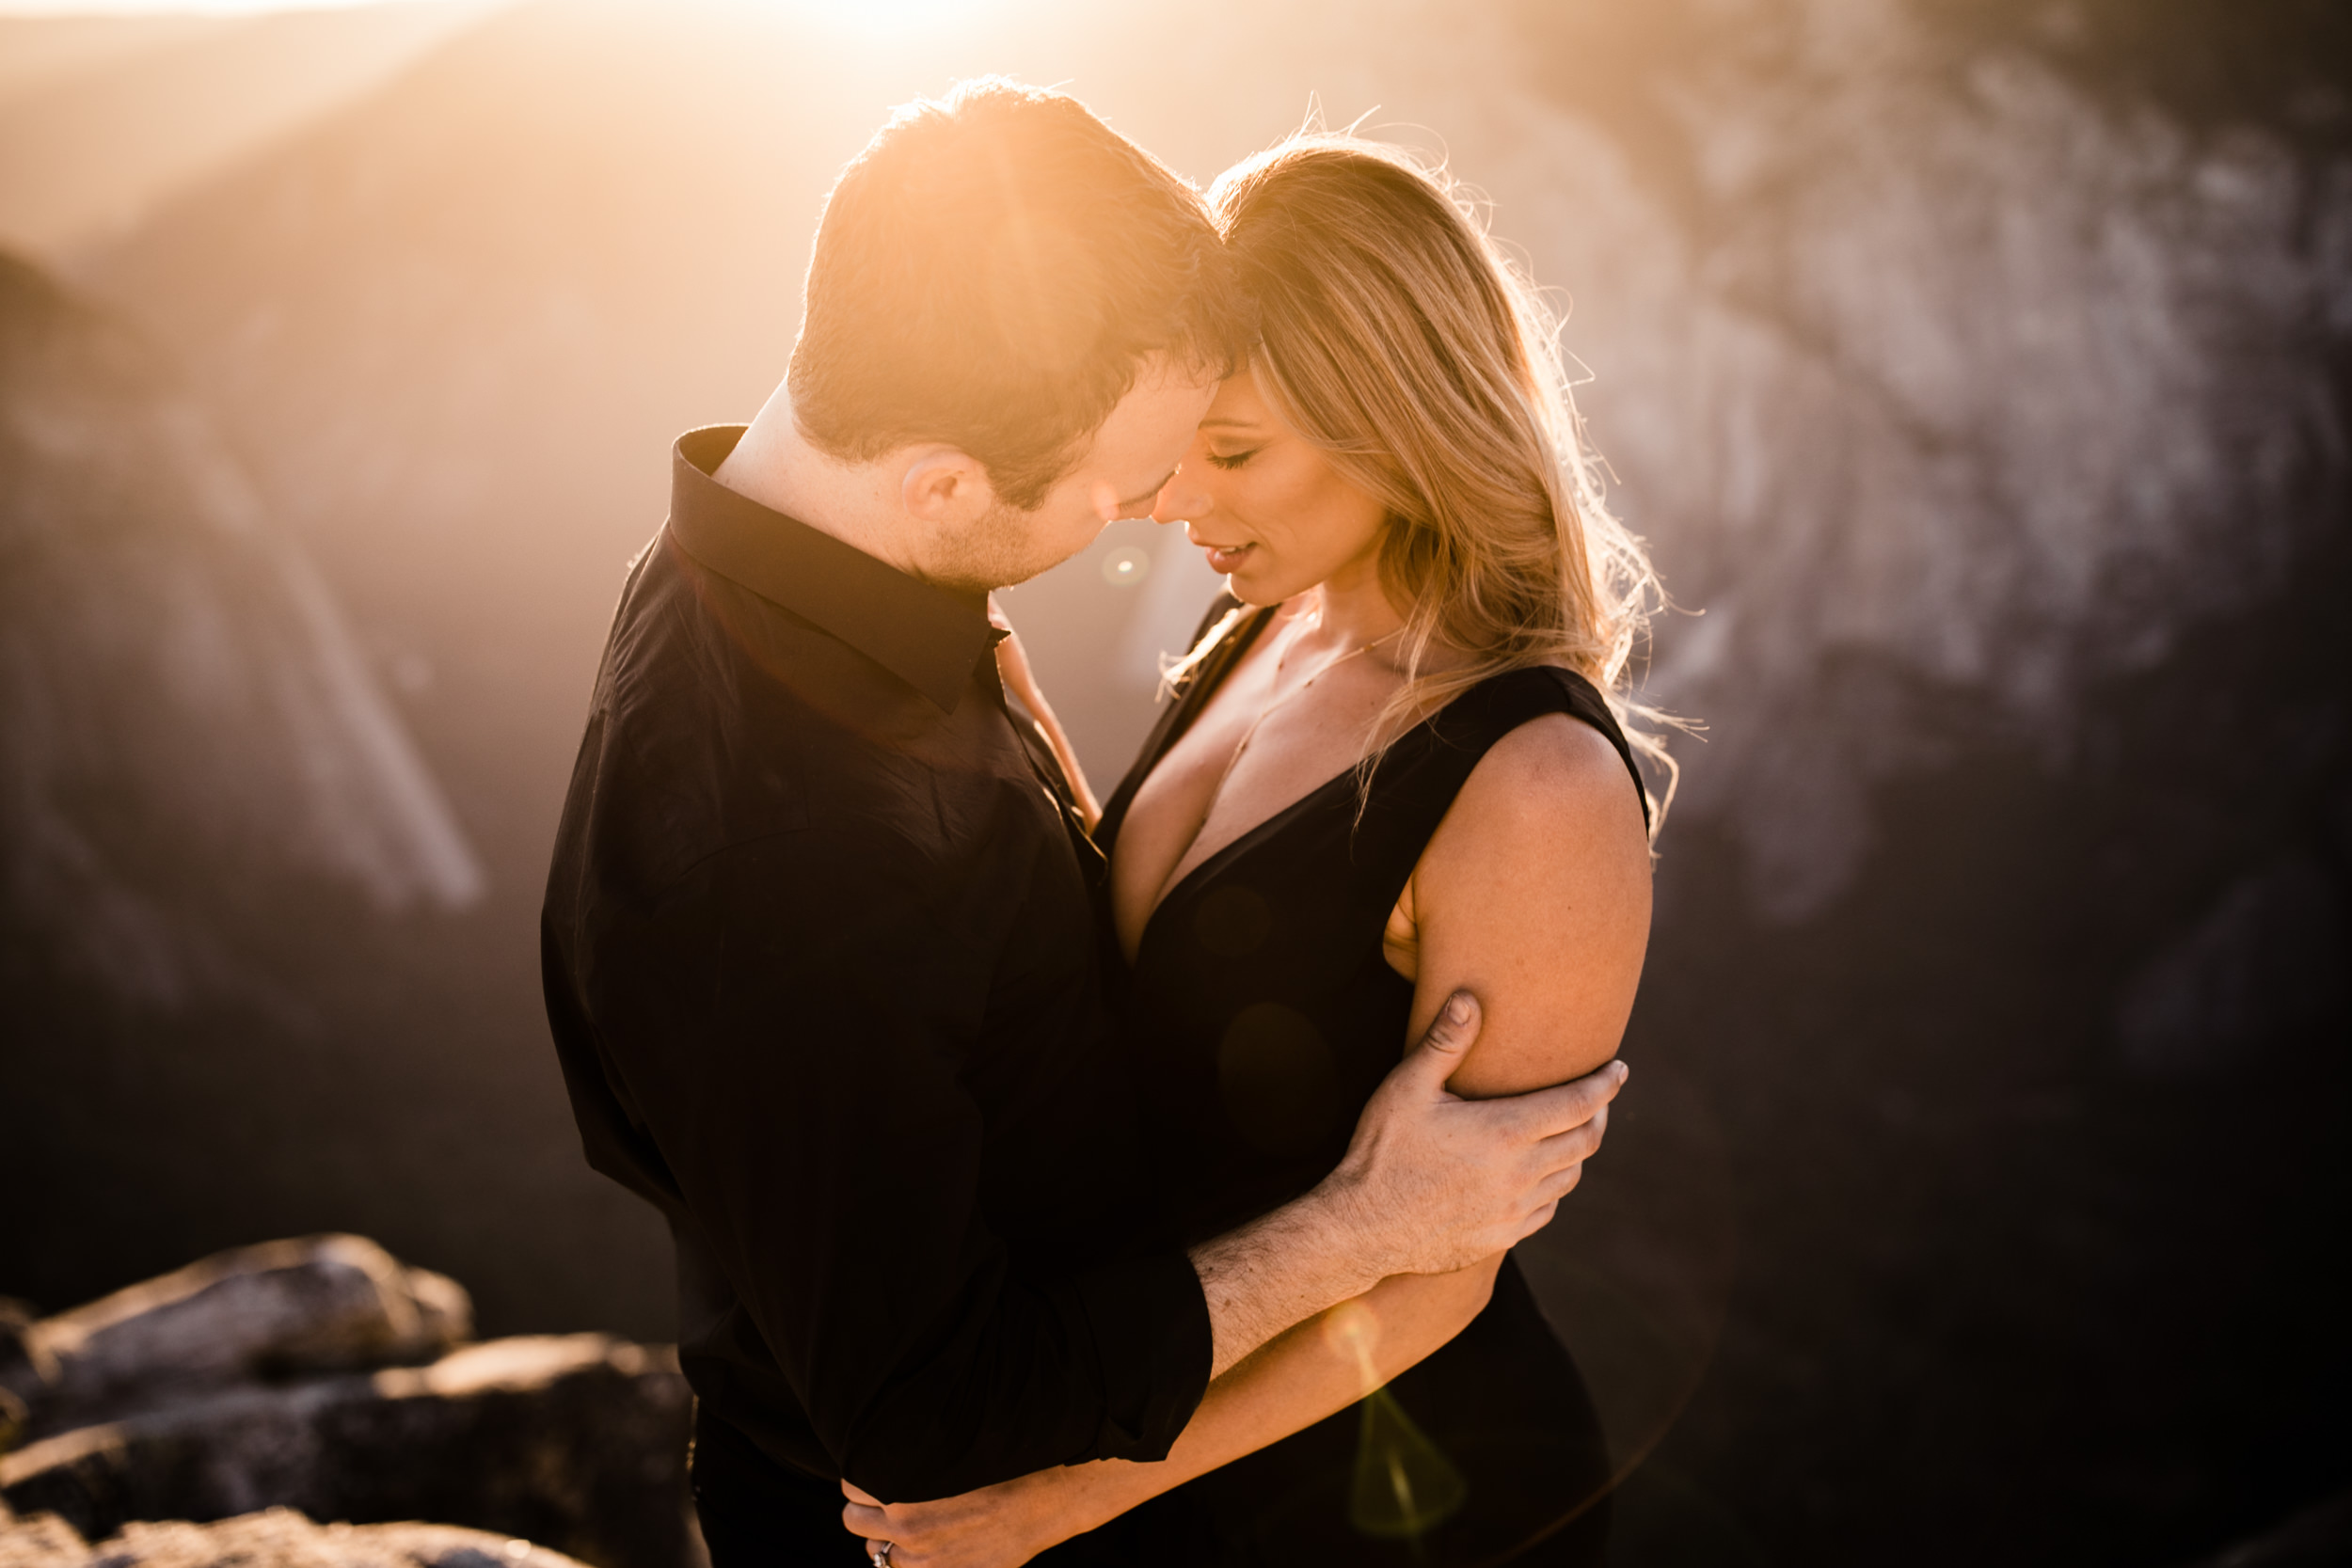 alexandra + david's destination engagement session in the mountains | yosemite elopement inspiration | taft point engagement photos | yosemite national park wedding photographer